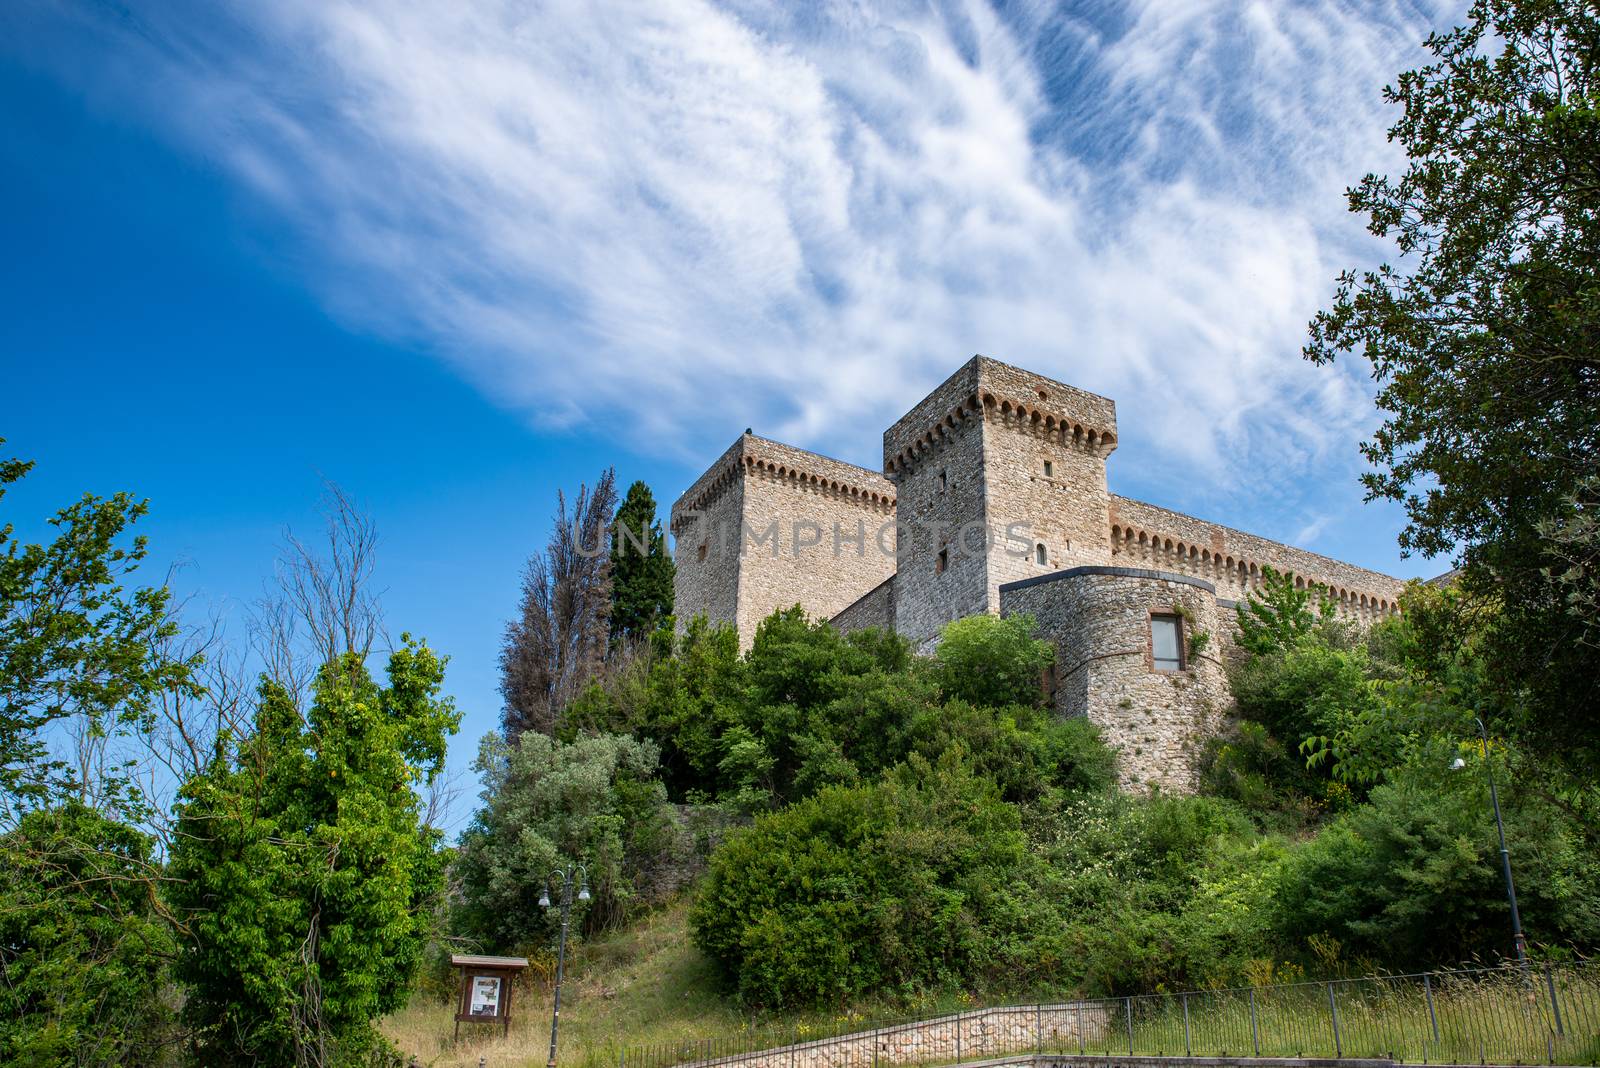 albornoz fortress on the hill above narni by carfedeph